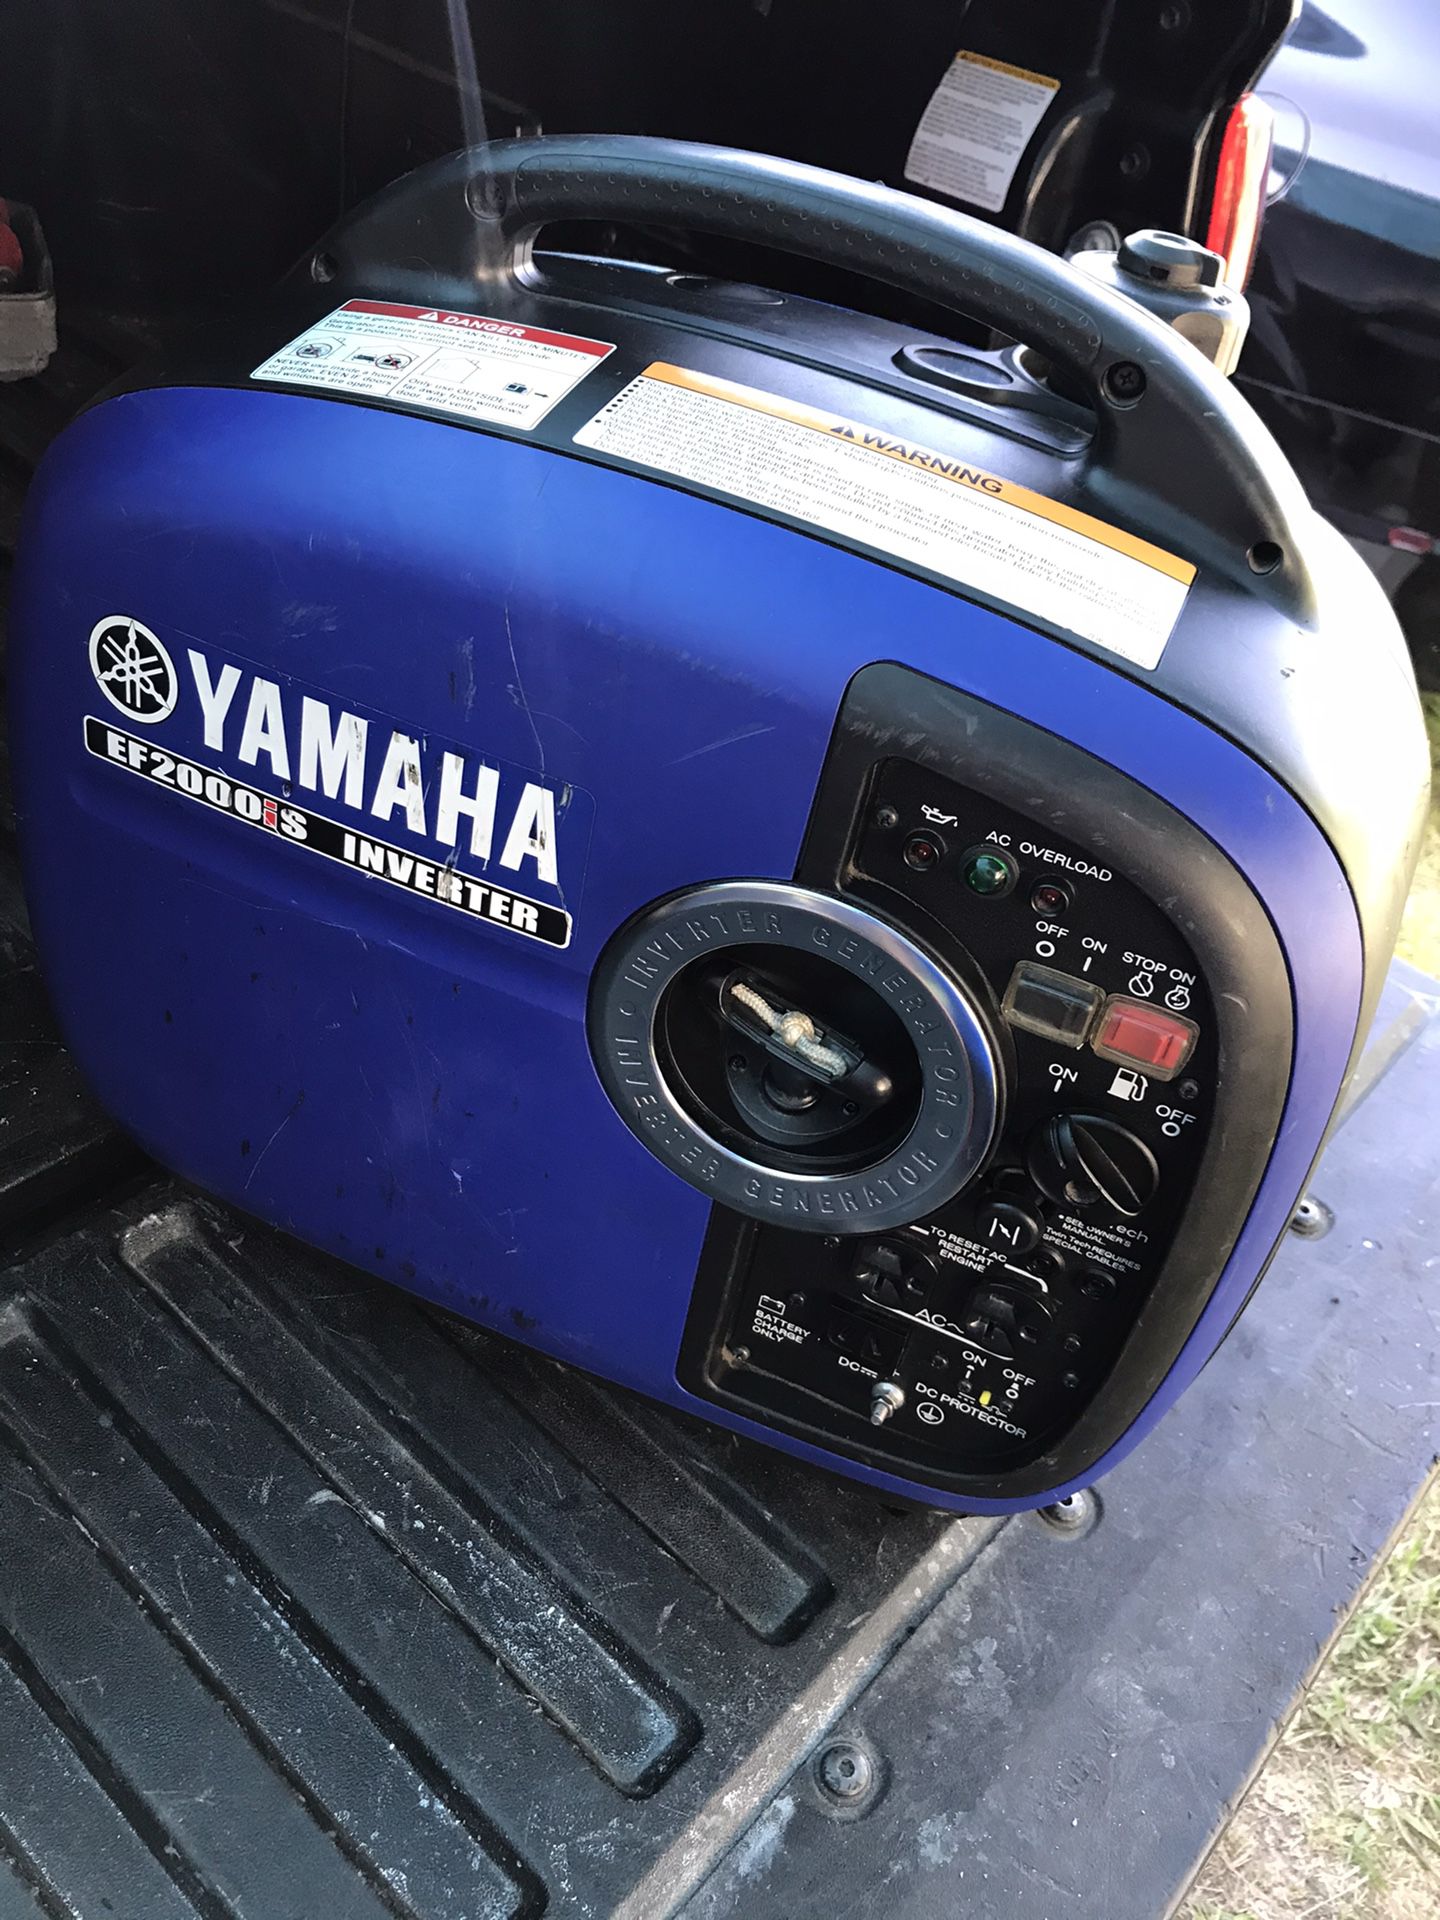 Yamaha ef2000is generator in good condition